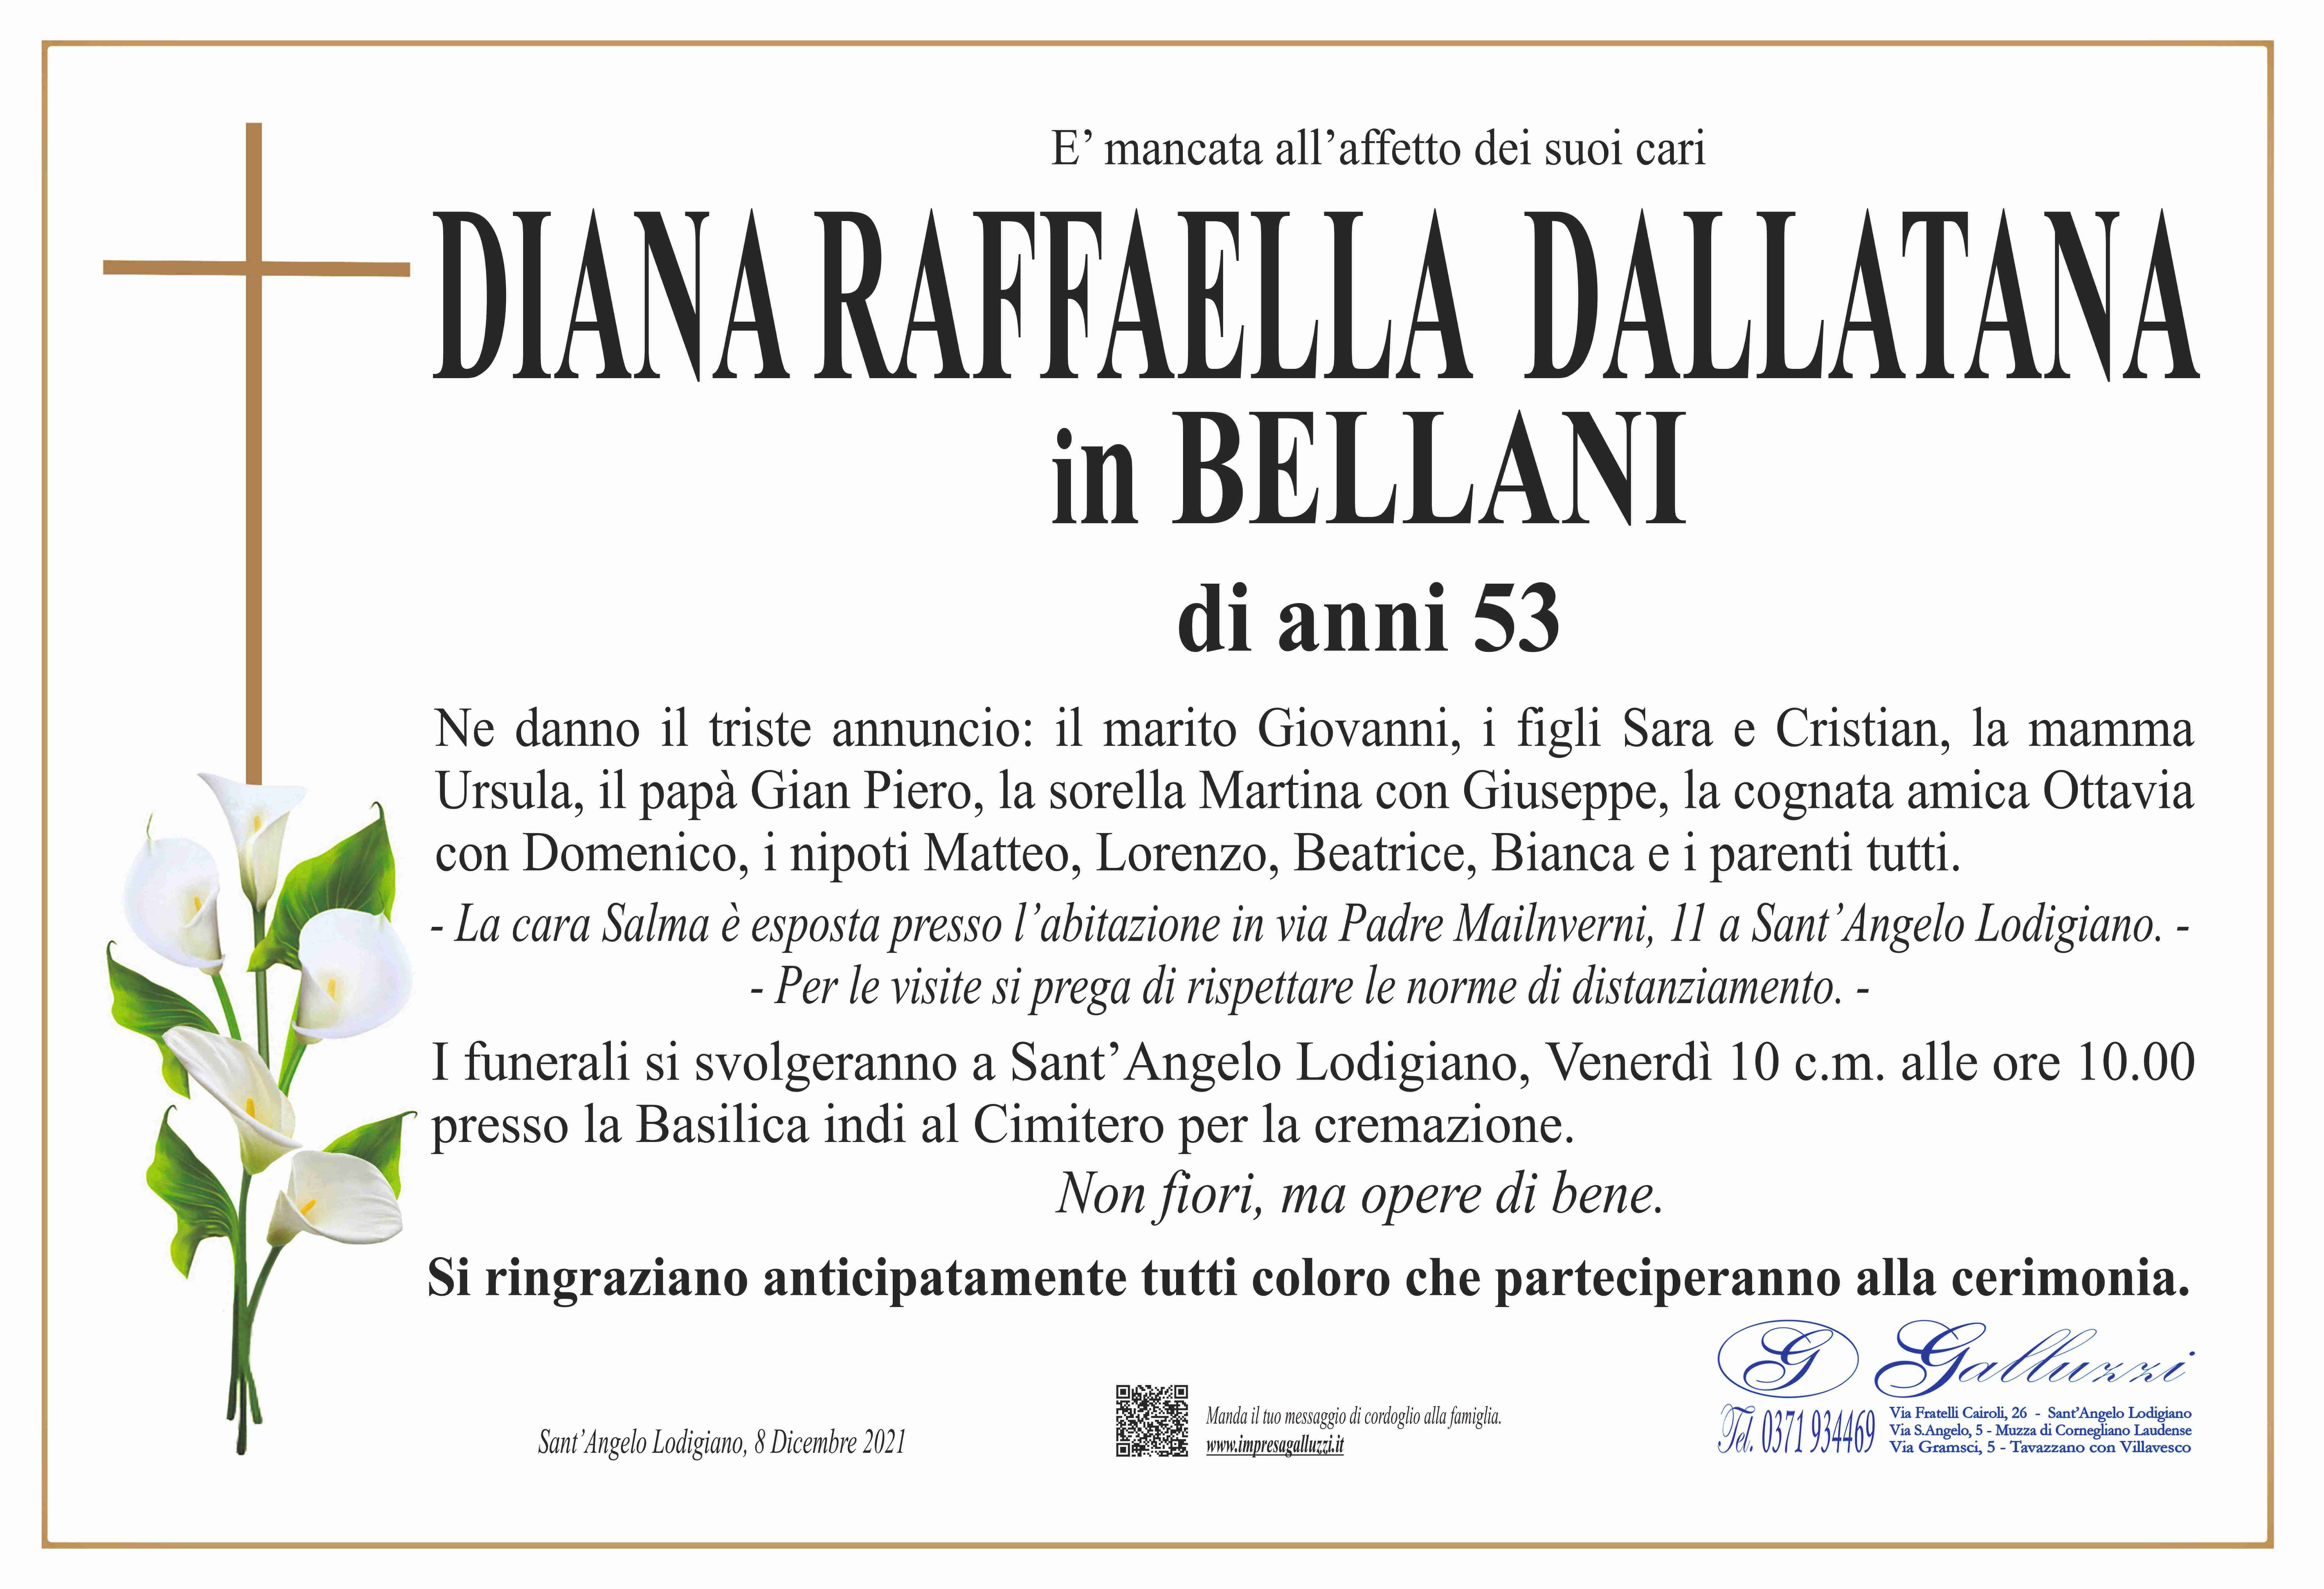 Diana Raffaella Dallatana